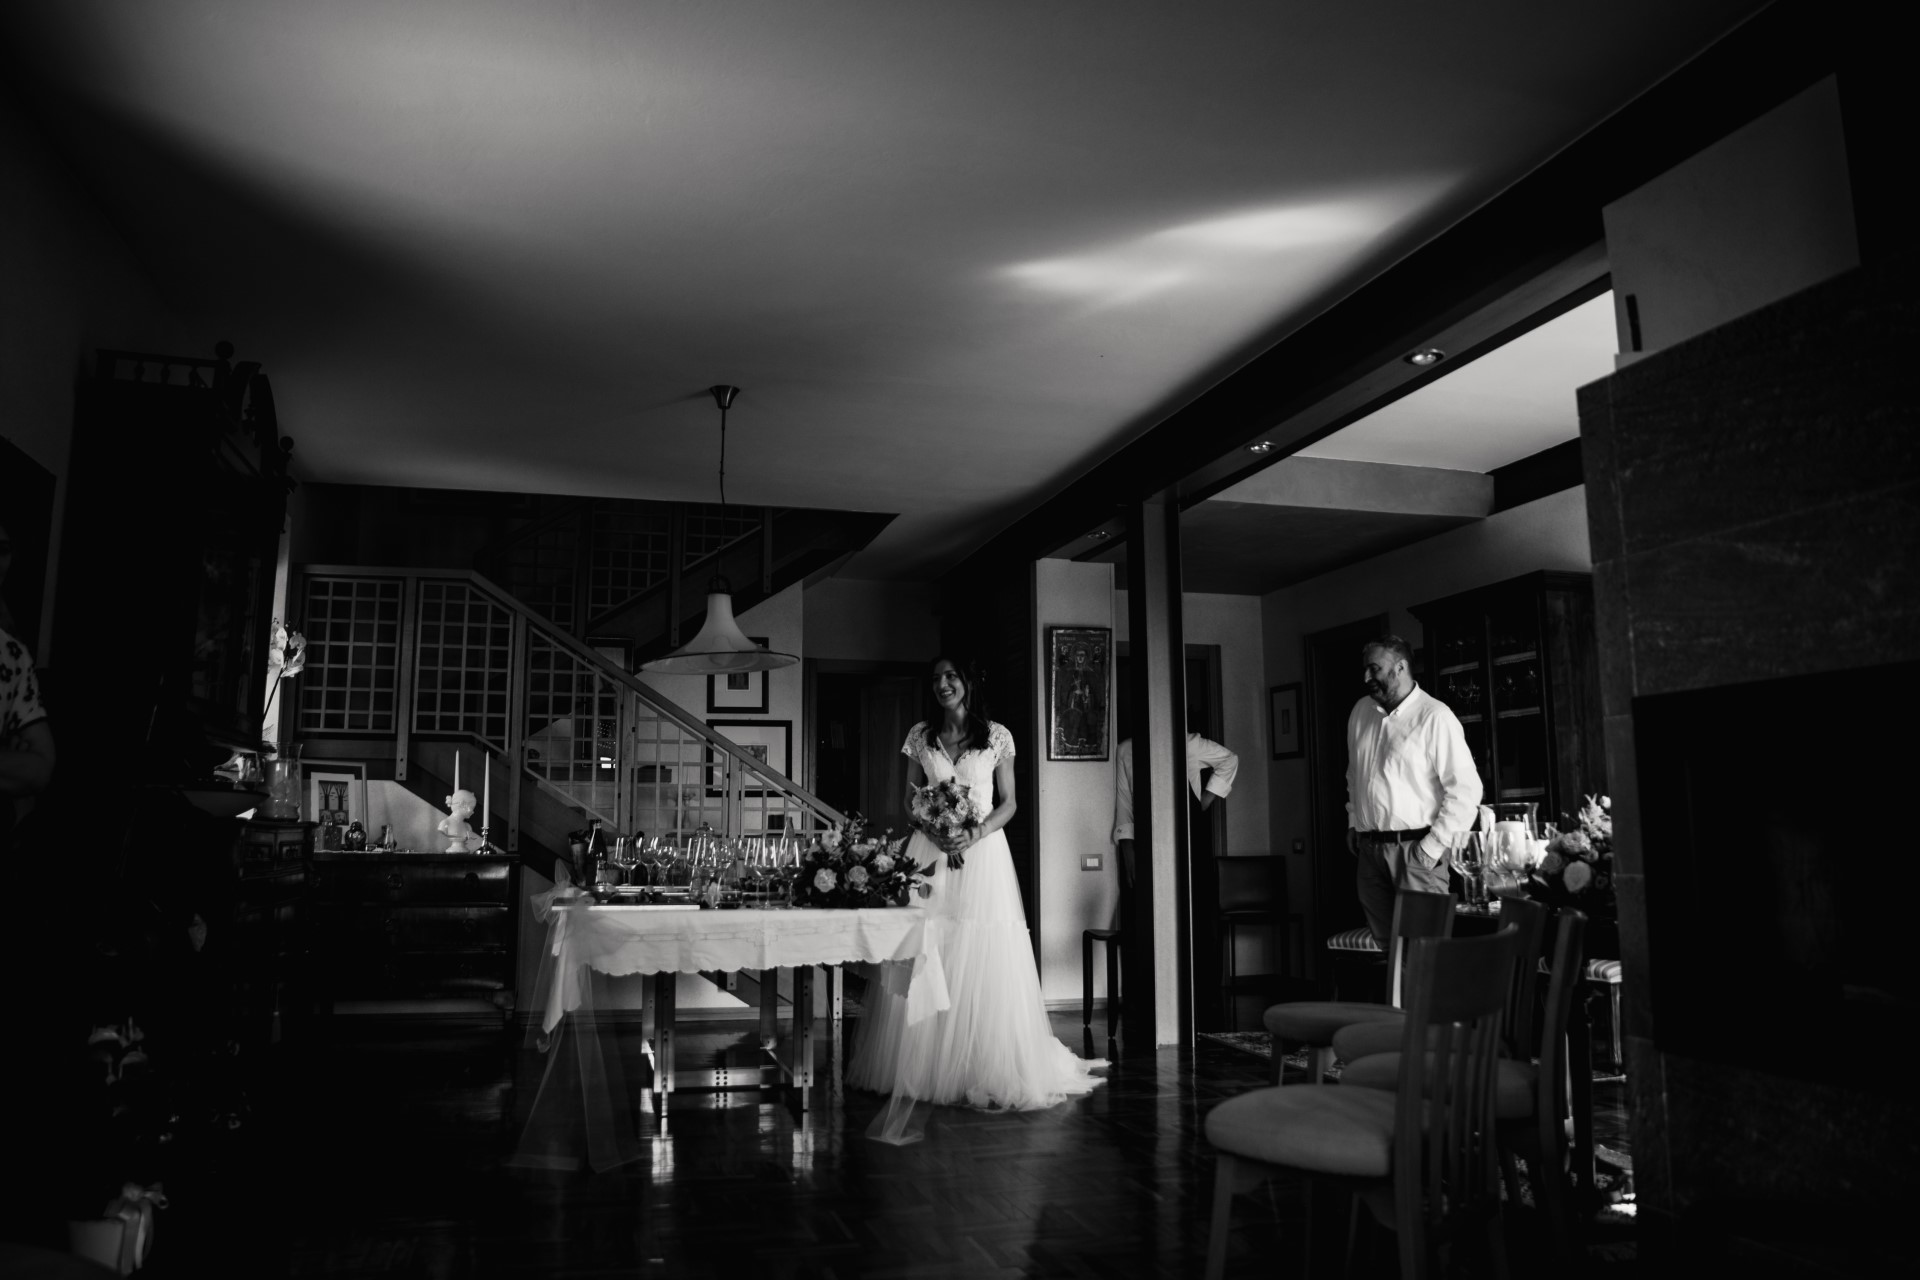 Eleonora&Luigi fotografo matrimonio destination wedding photographer videographer luxury reportage italia italy como lake amalfi coast apulia rome roma sicily